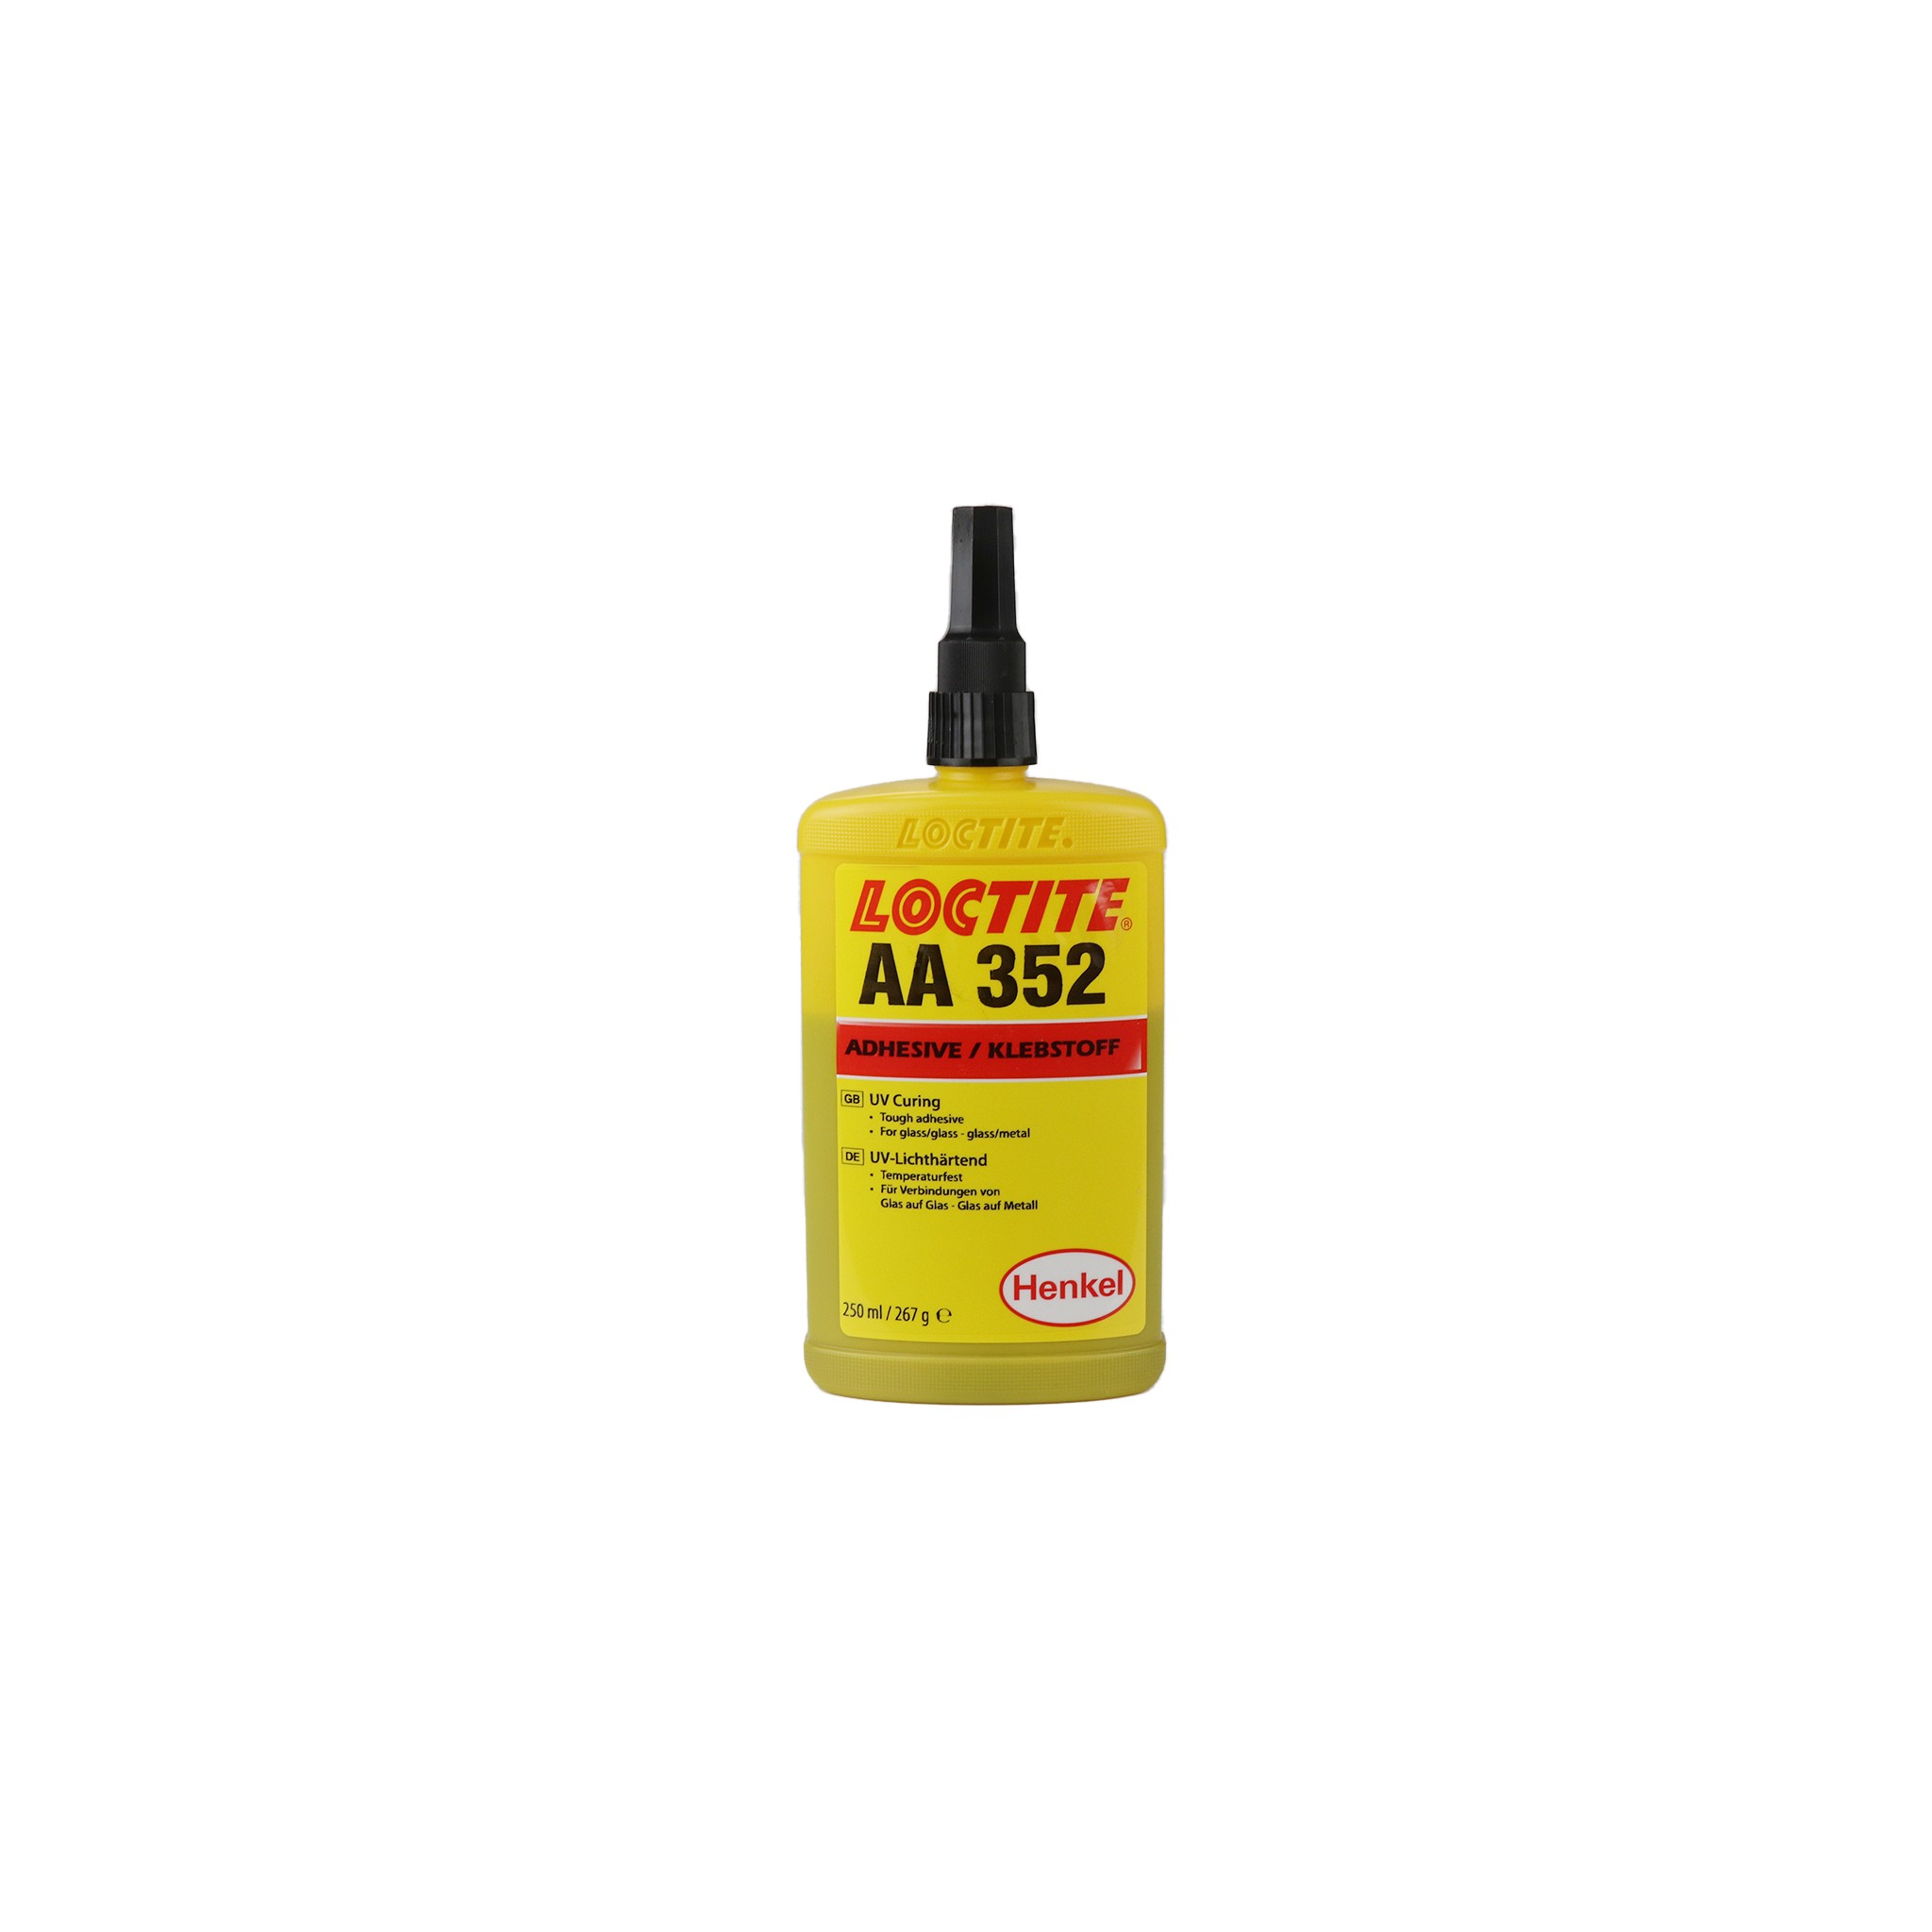 LOCTITE AA 352 - Henkel Adhesives